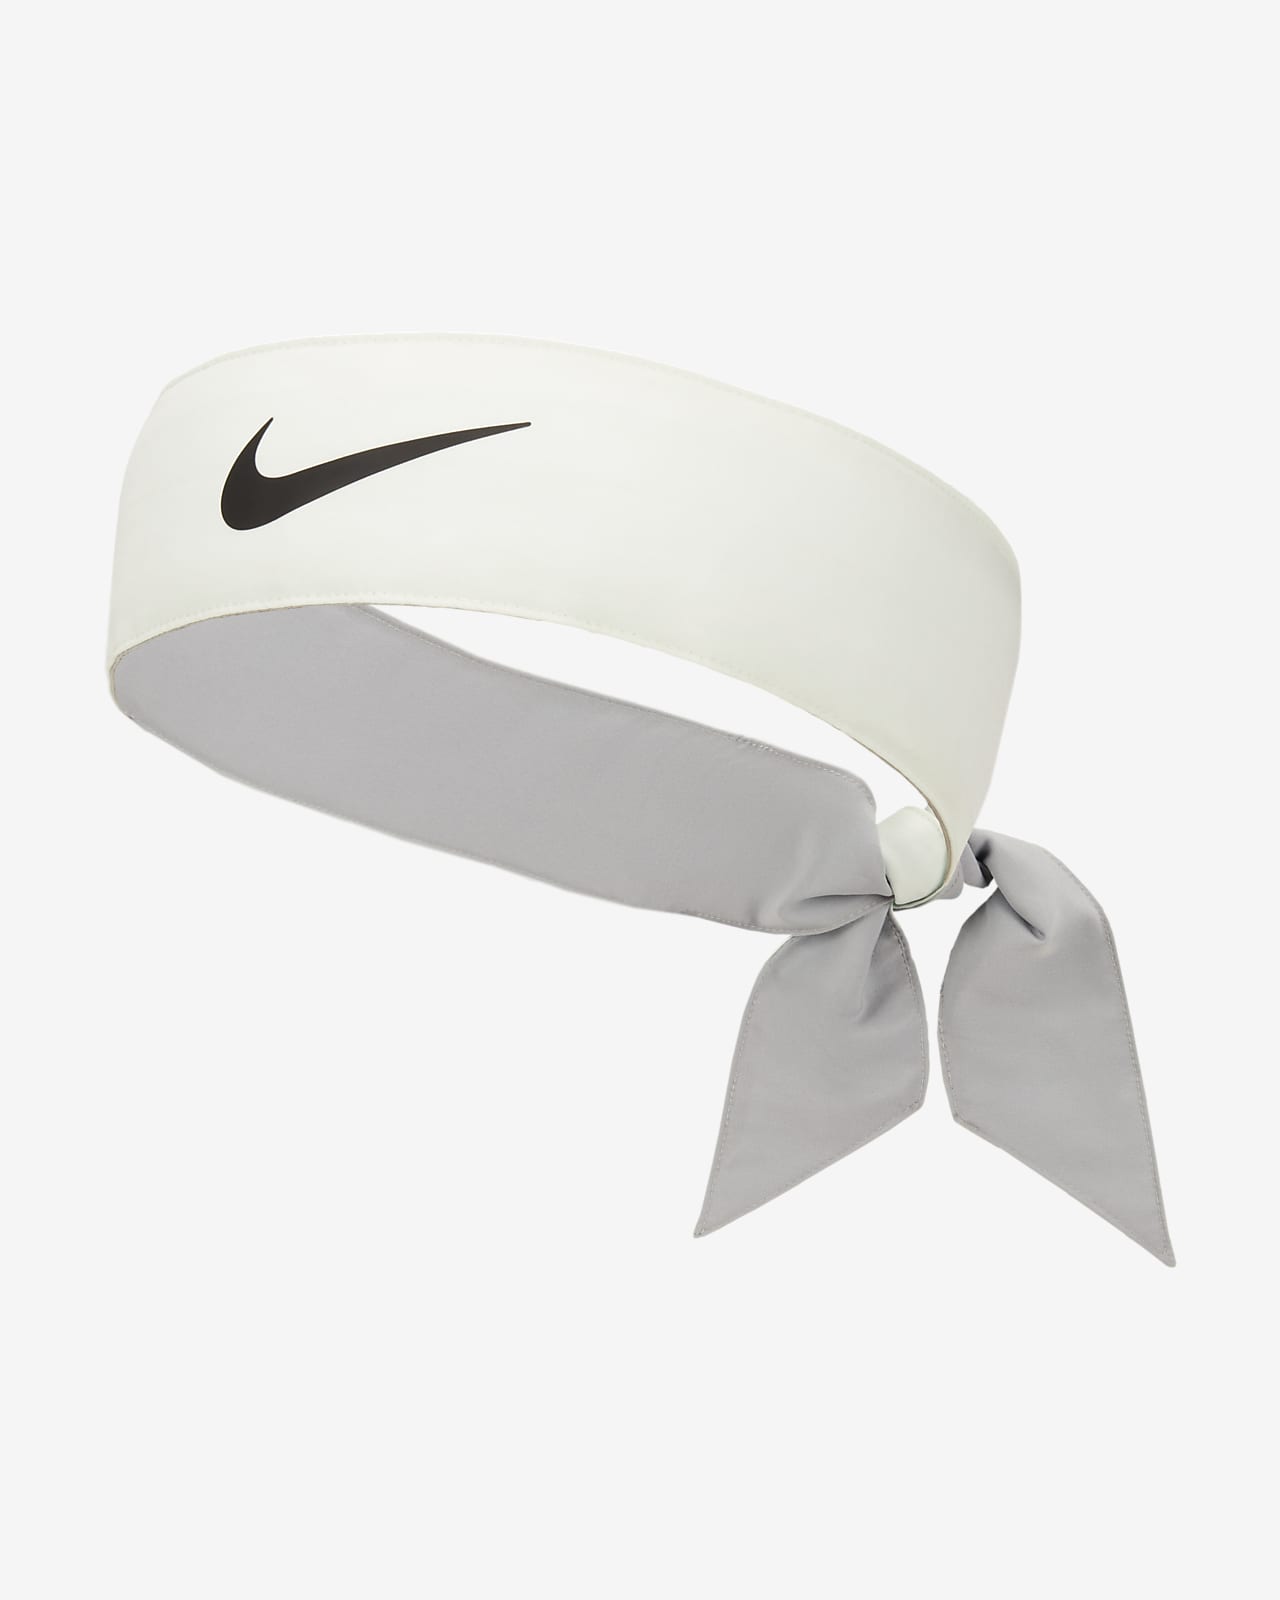 Bandeau tennis femme Nike premier - Nike - Marques - Textile